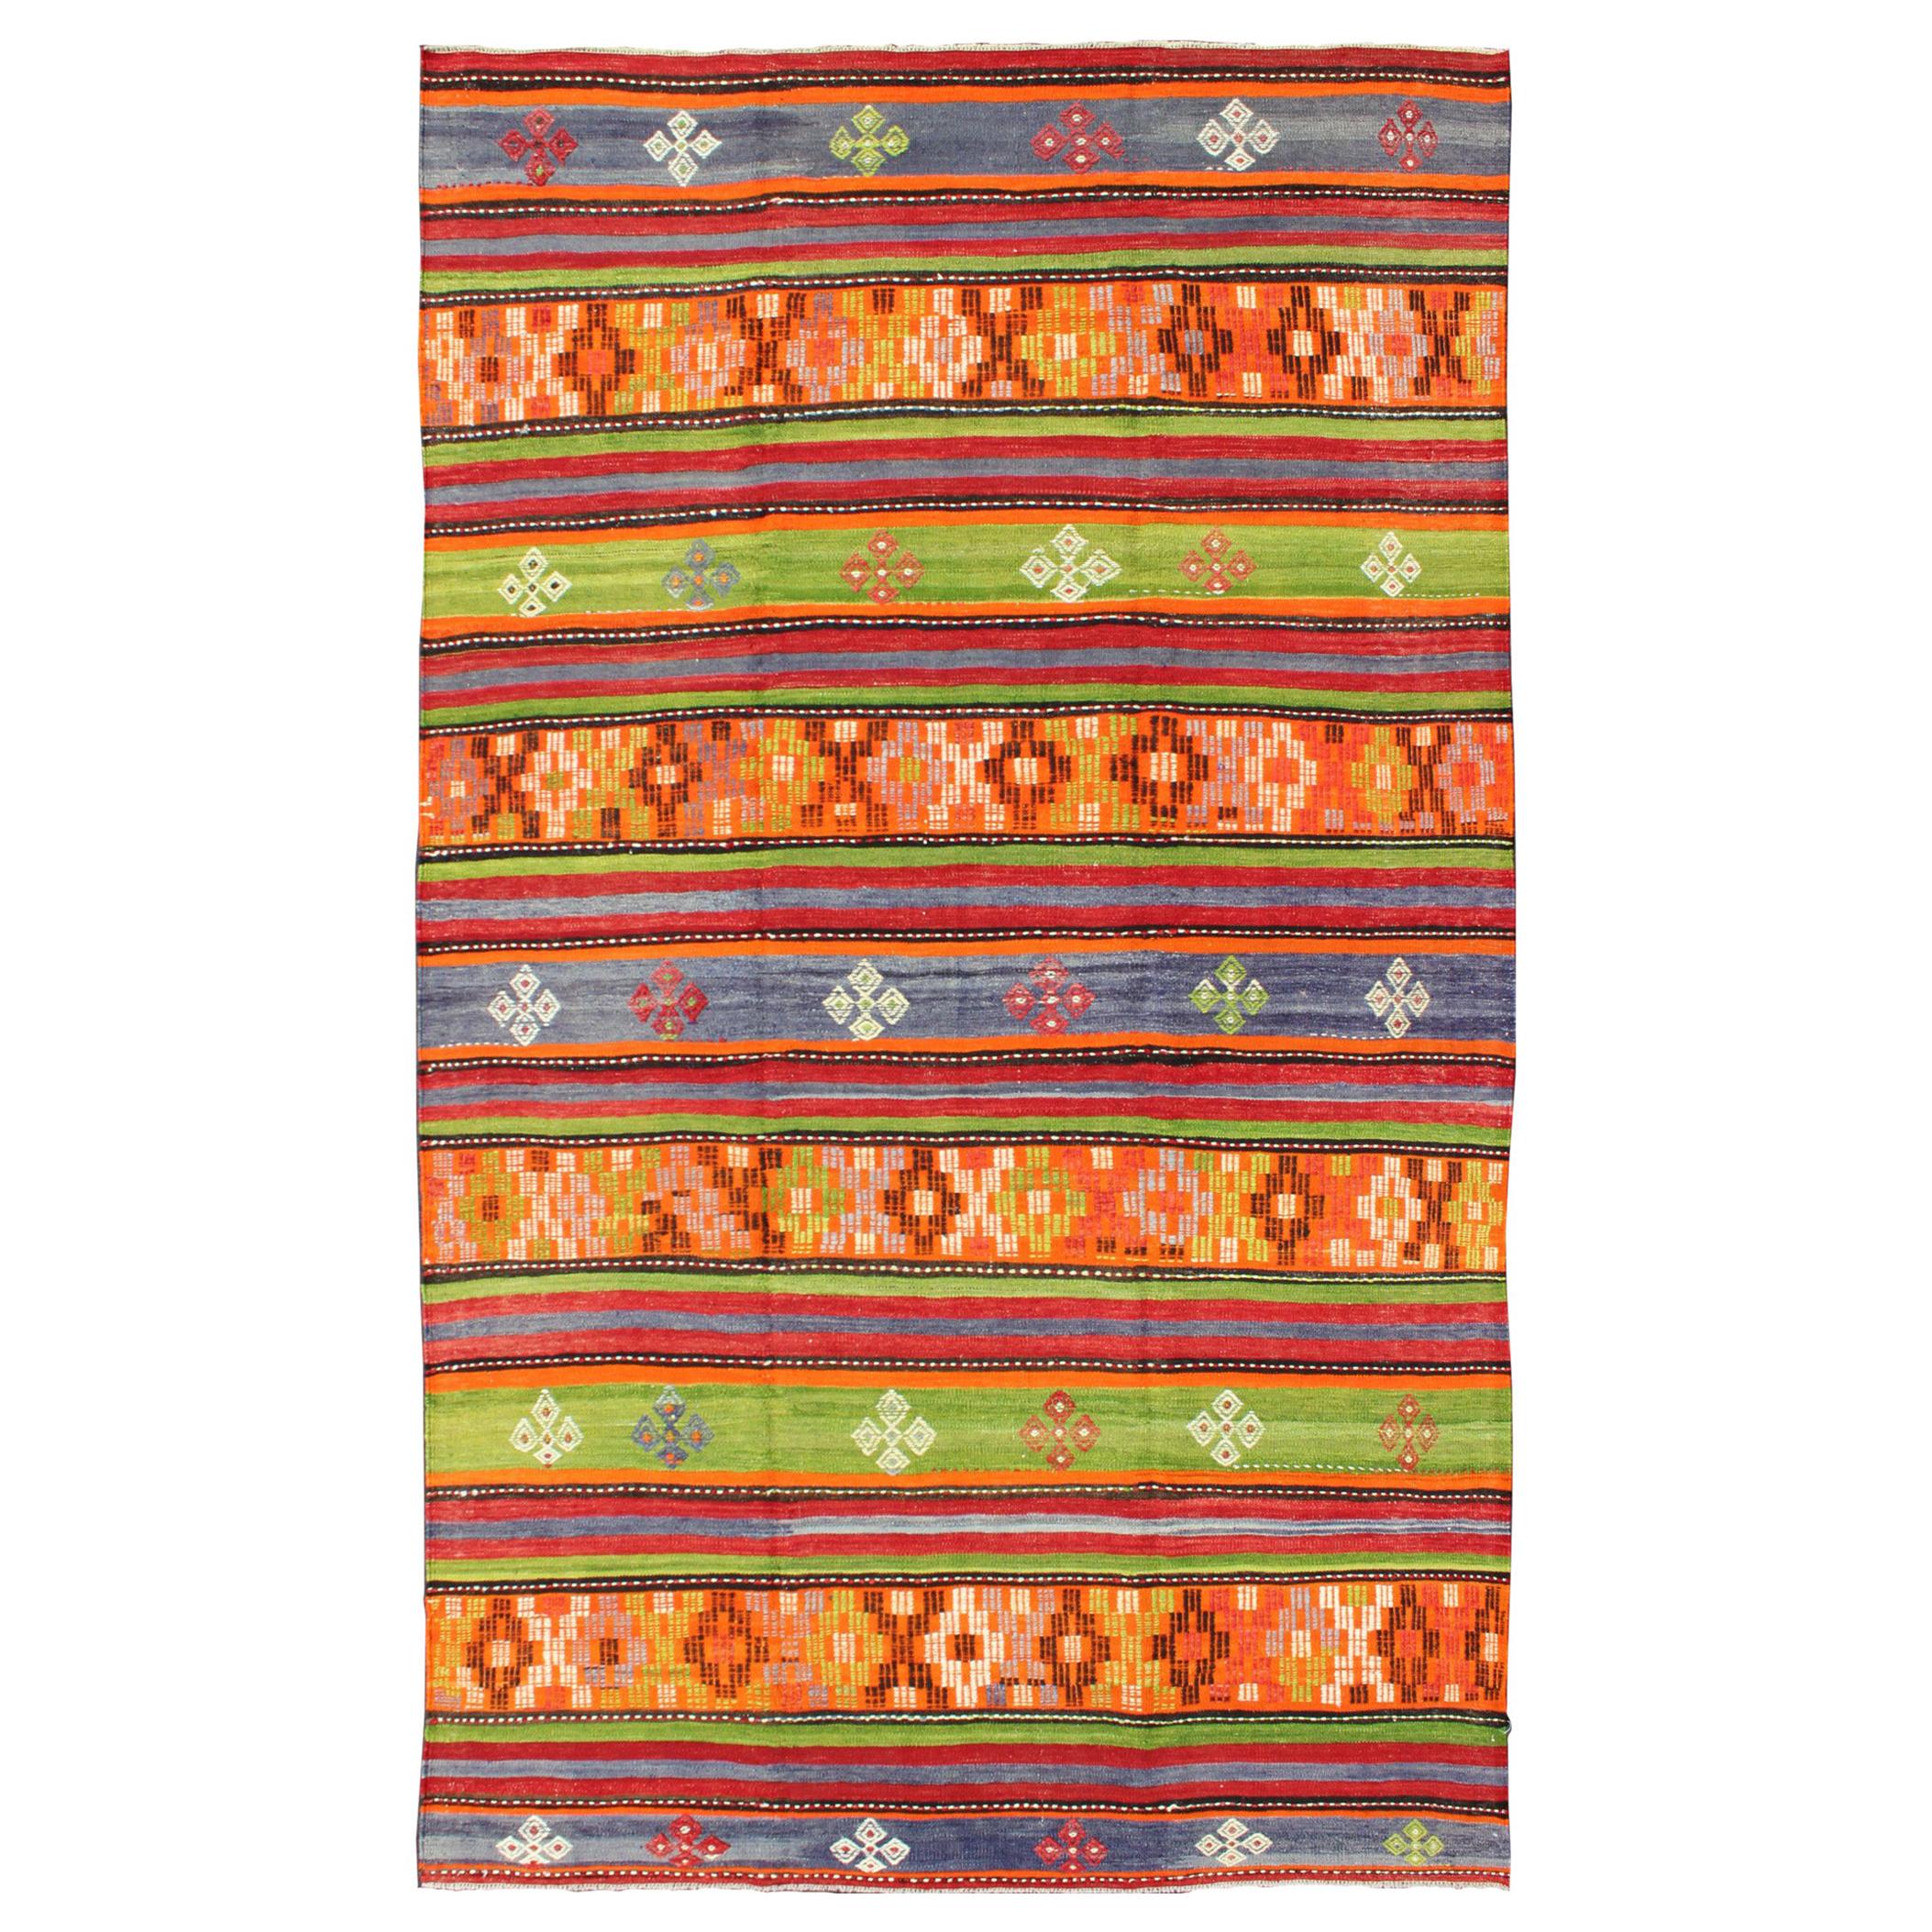  Colorful and Bright Turkish Kilim Rug with Stripe Geometric Design